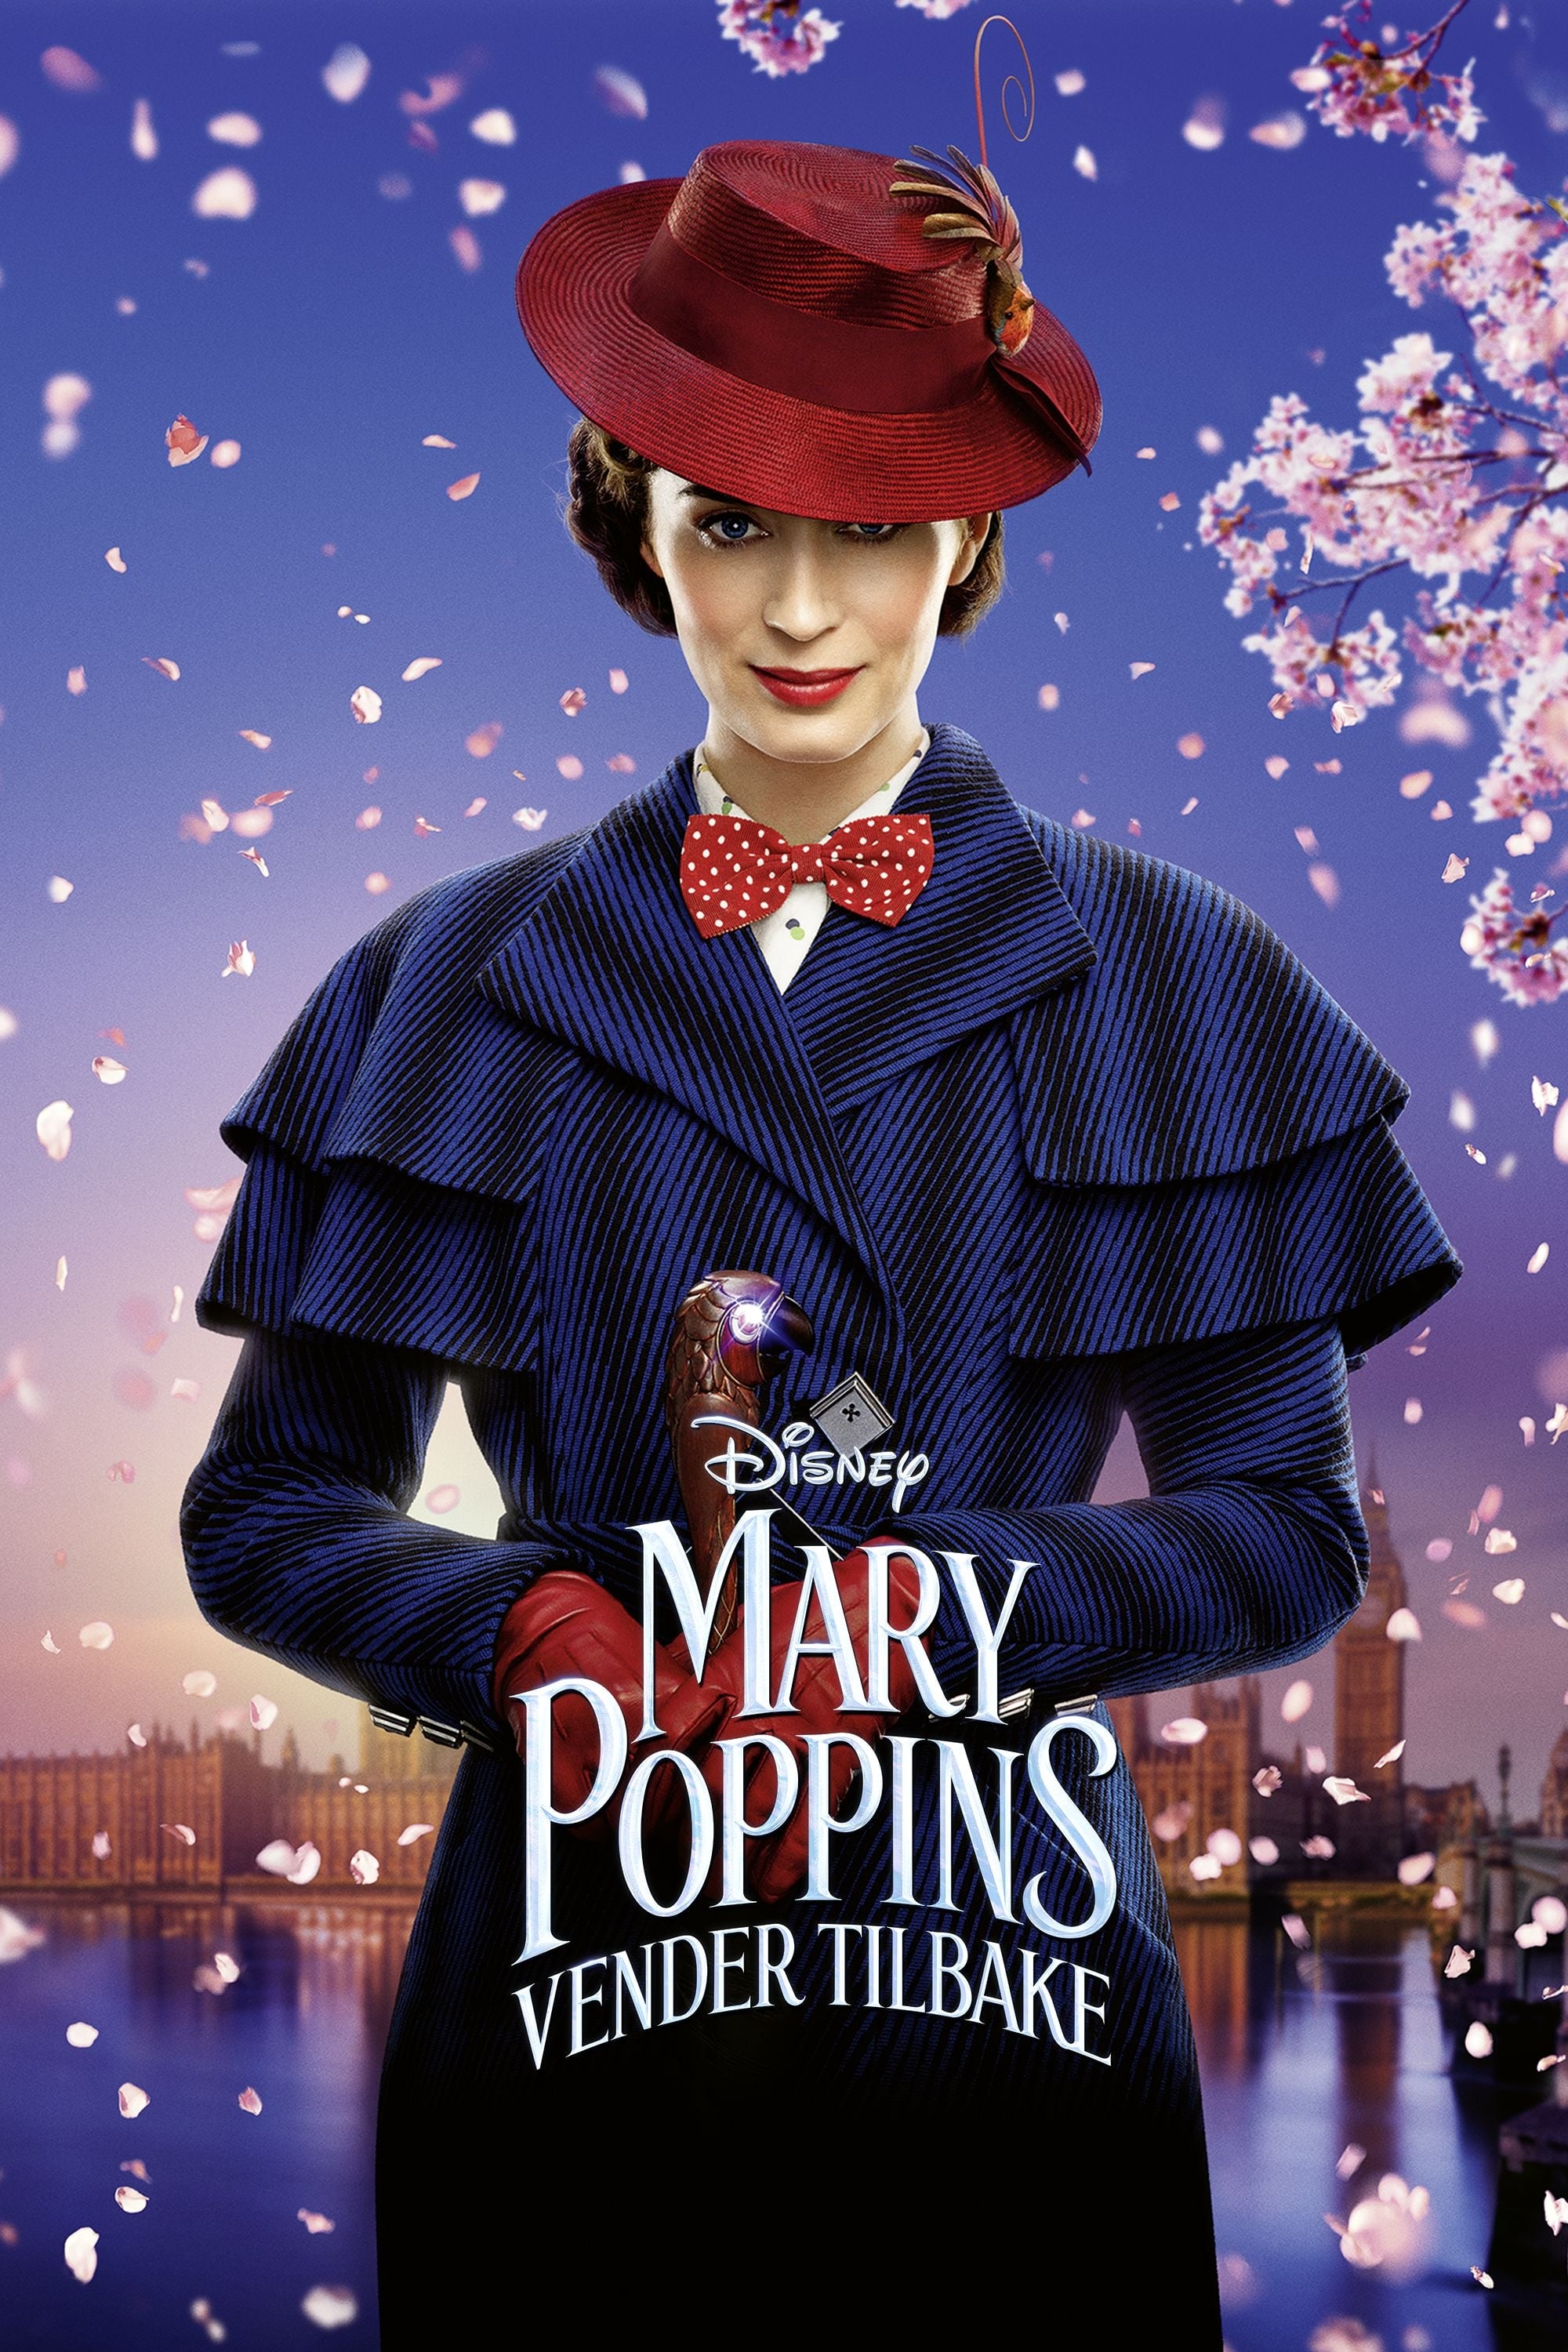 NO Mary Poppins Returns